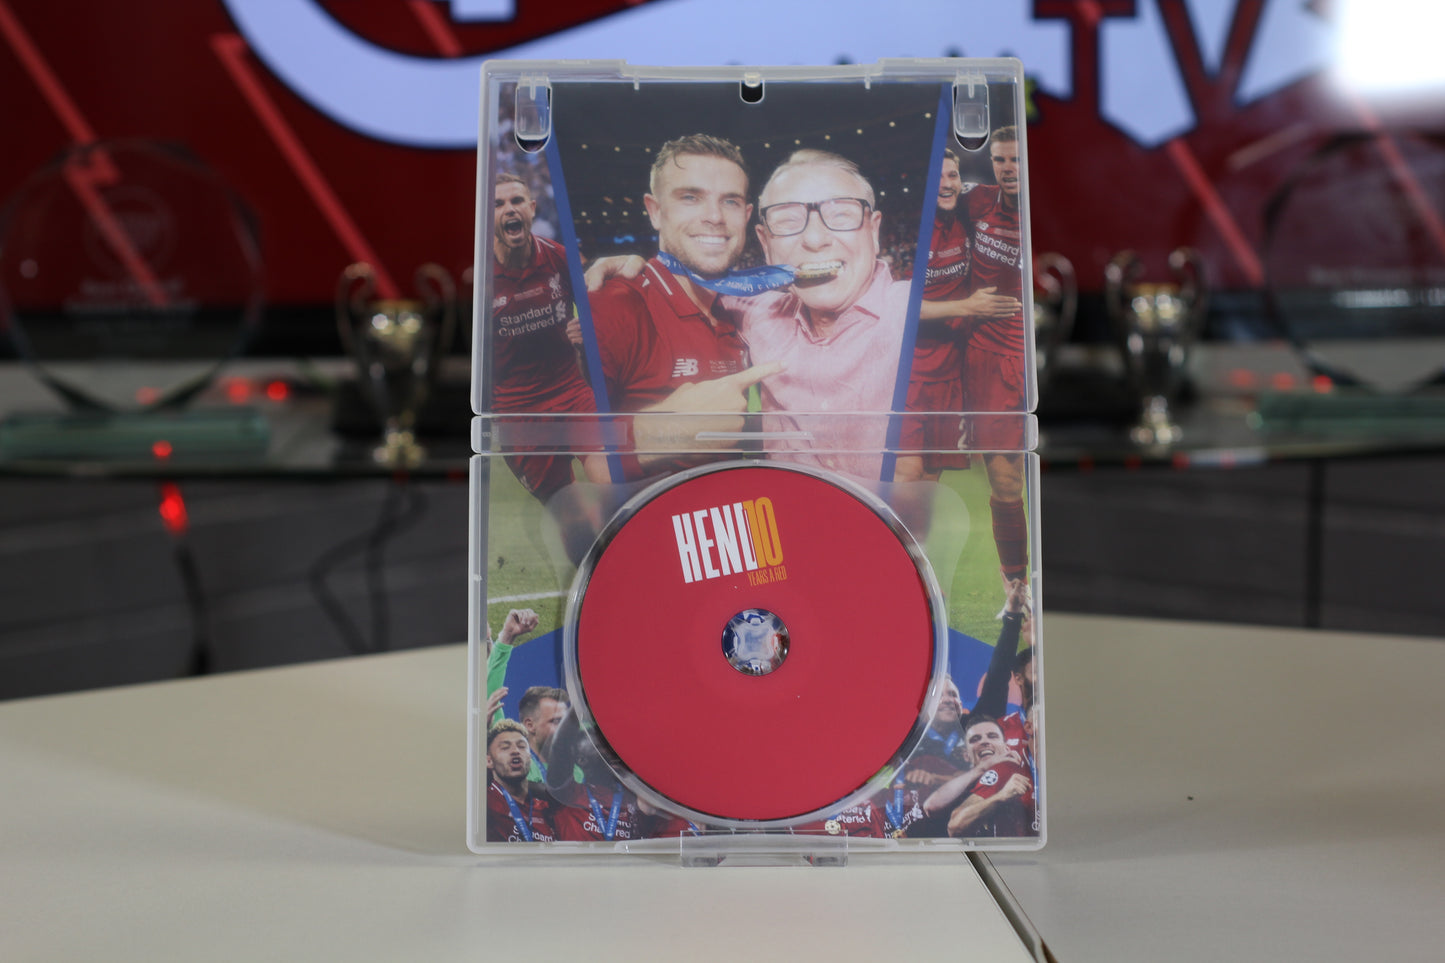 Hendo 10 Years A Red | A Redmen TV Docu-Series | DVD